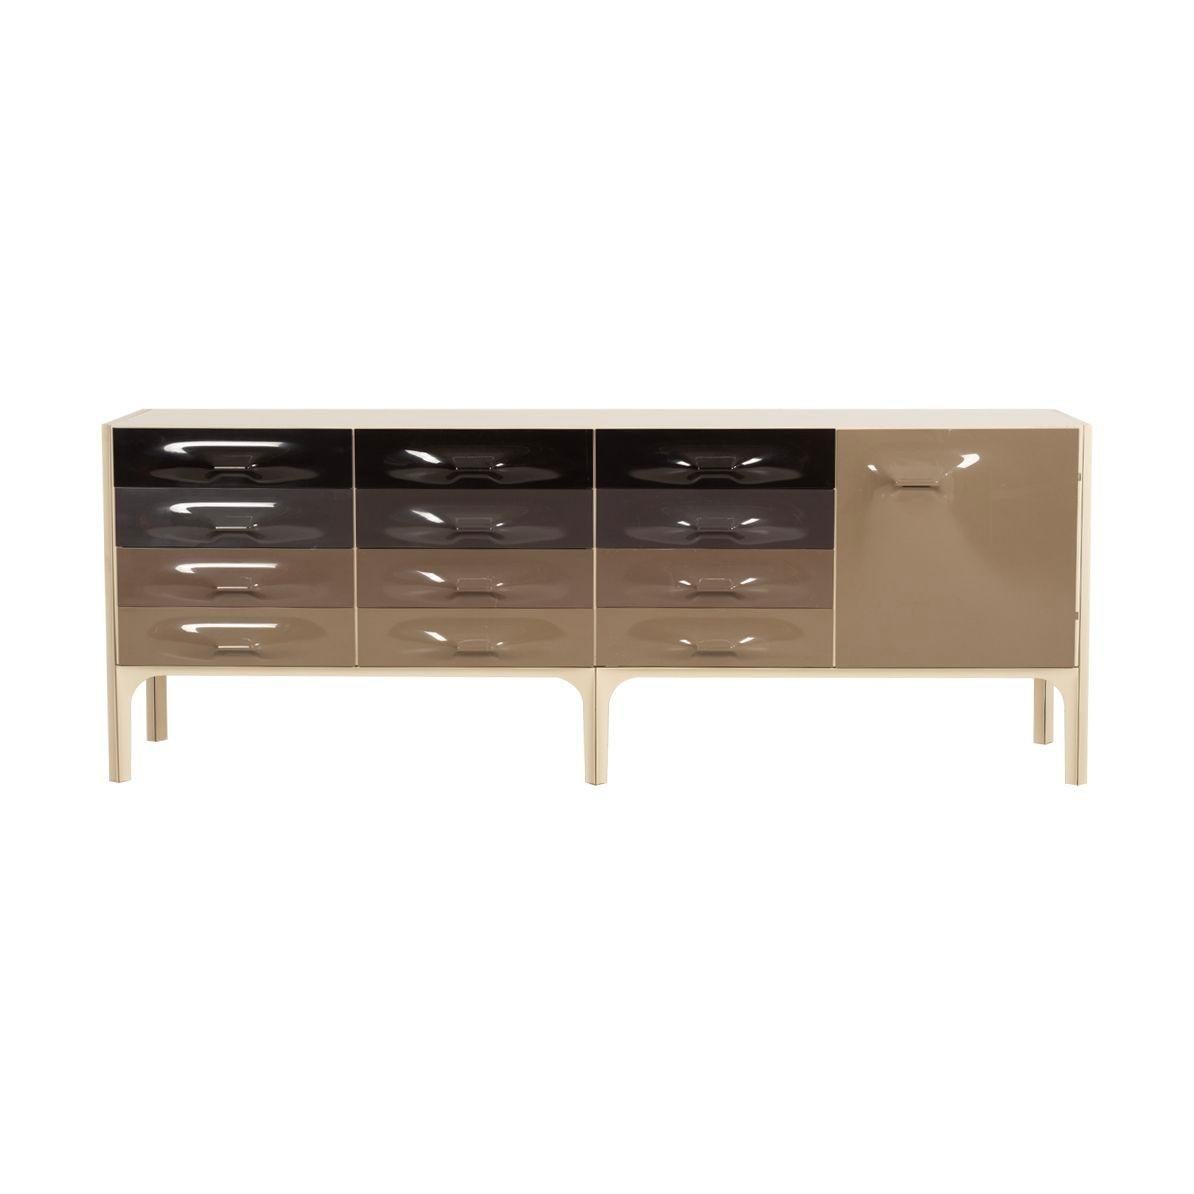 Appliqué Raymond Loewy DF 2000 Cabinet For Sale